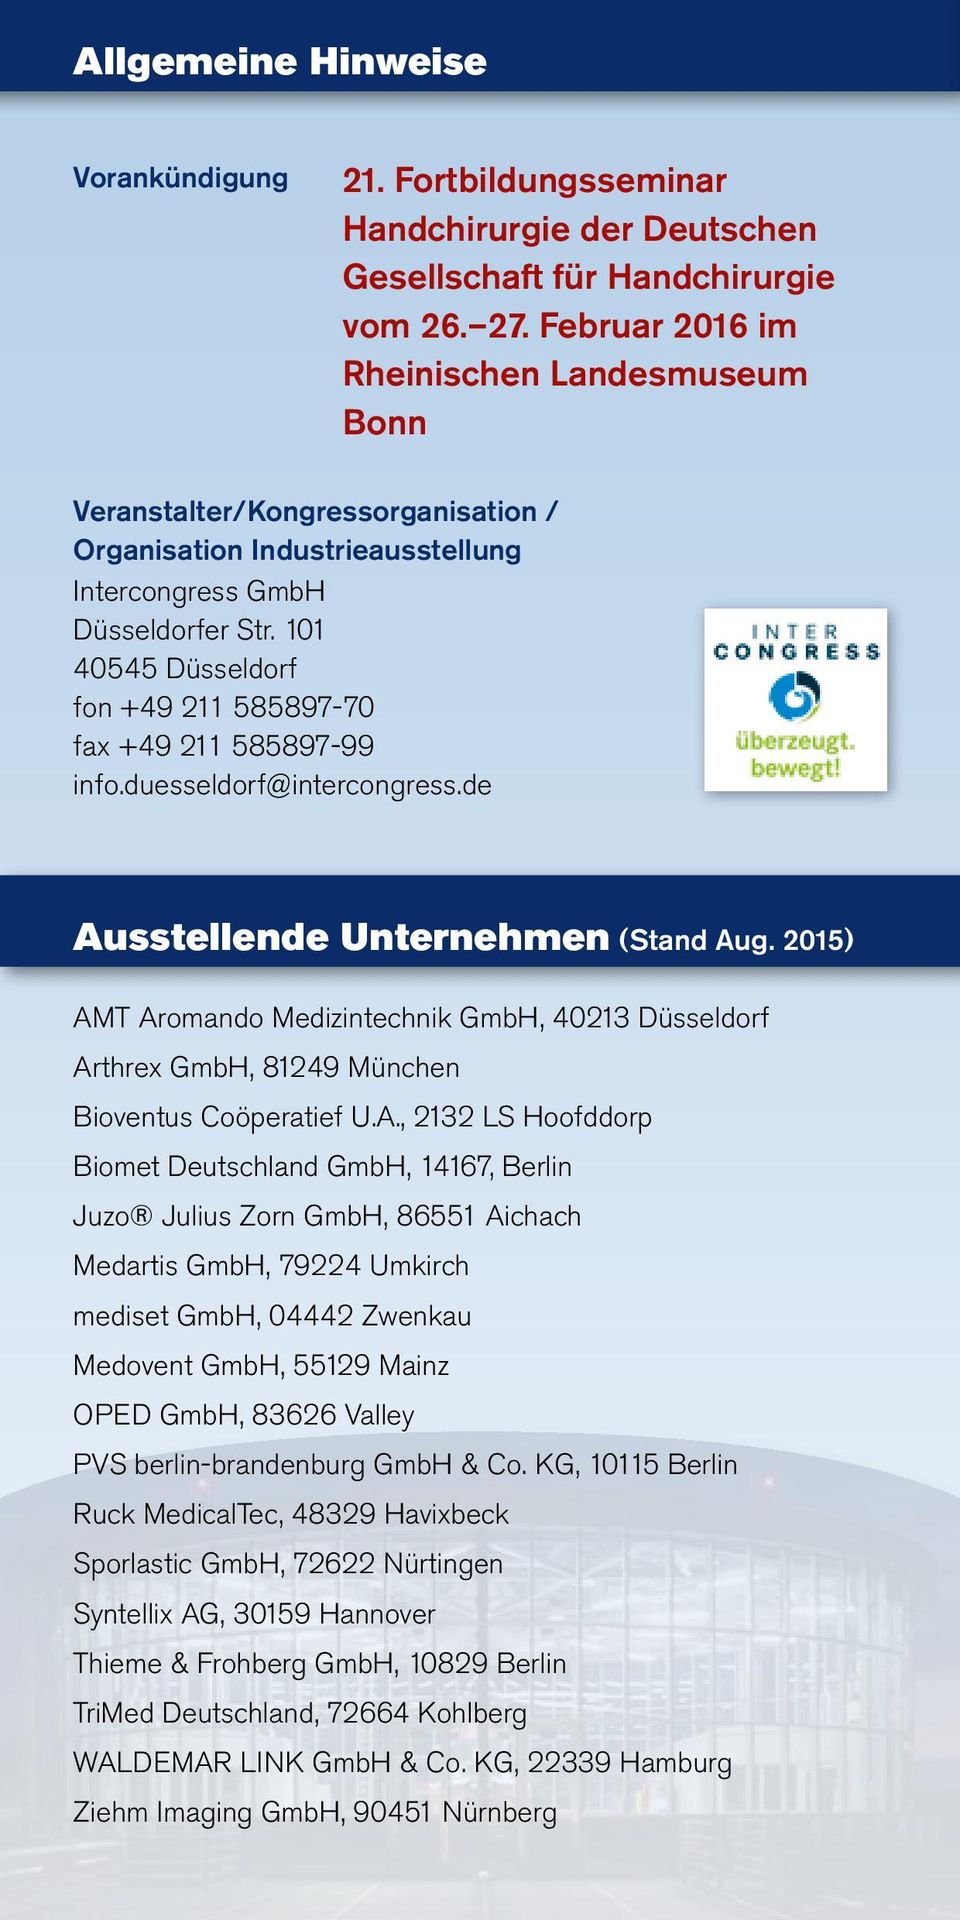 101 40545 Düsseldorf fon +49 211 585897-70 fax +49 211 585897-99 info.duesseldorf@intercongress.de Ausstellende Unternehmen (Stand Aug.